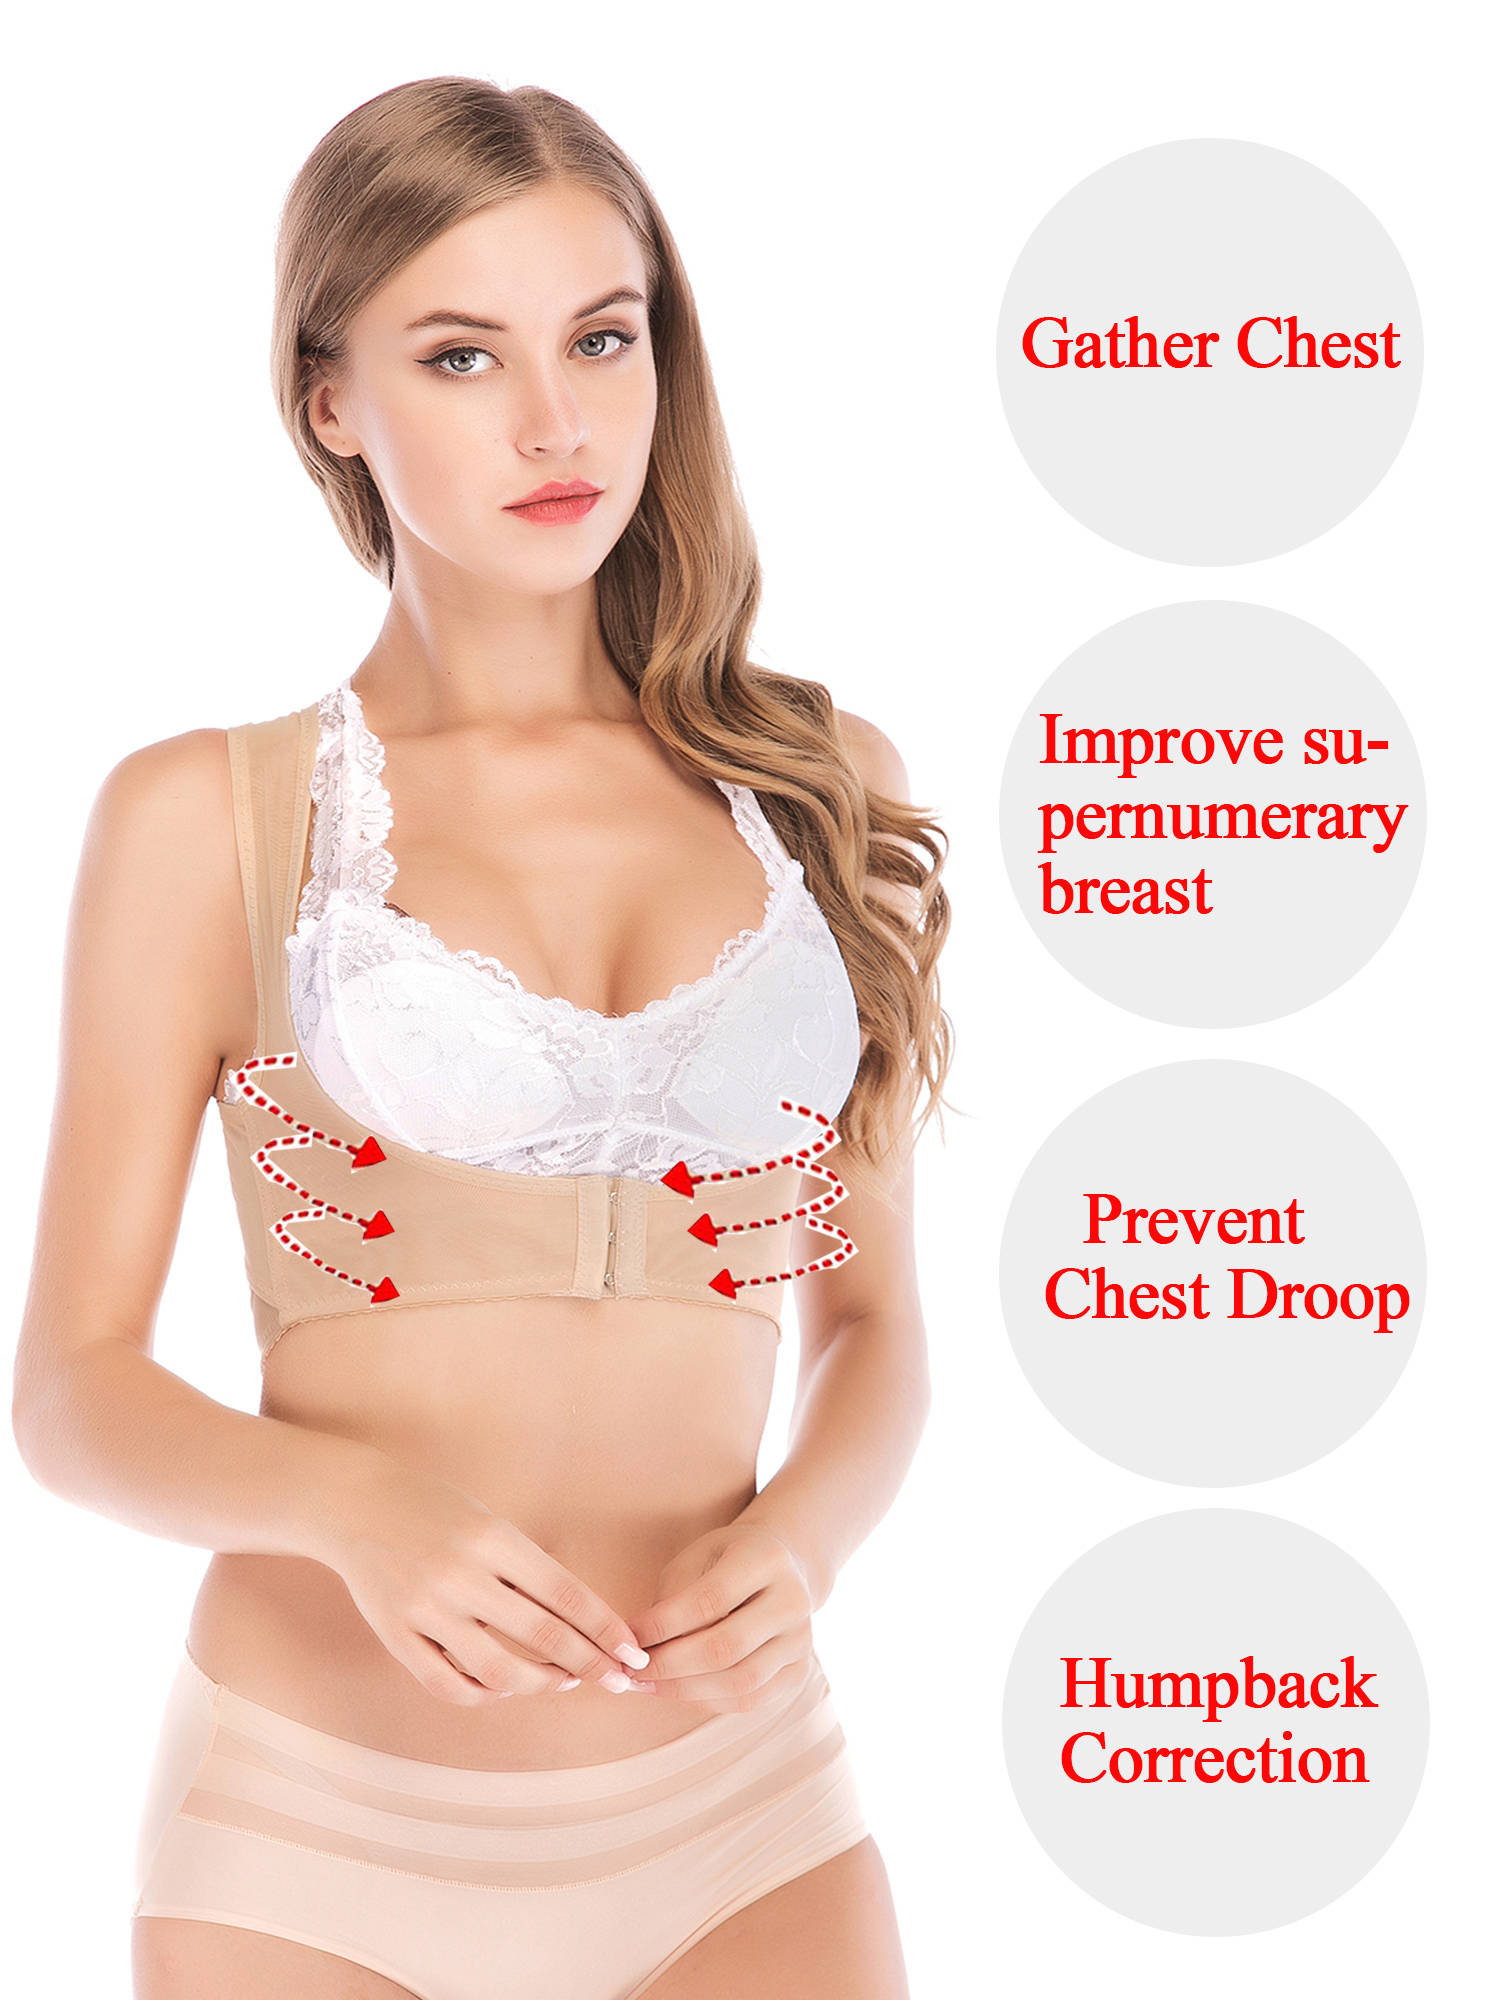 LELINTA Women's Posture Corrector Chest Brace Up Back Support Bra Shaper Vest Breast Lifter Shapewear Support Belt Vest Health Care Body Cheat Shapers,2PCS - image 4 of 8